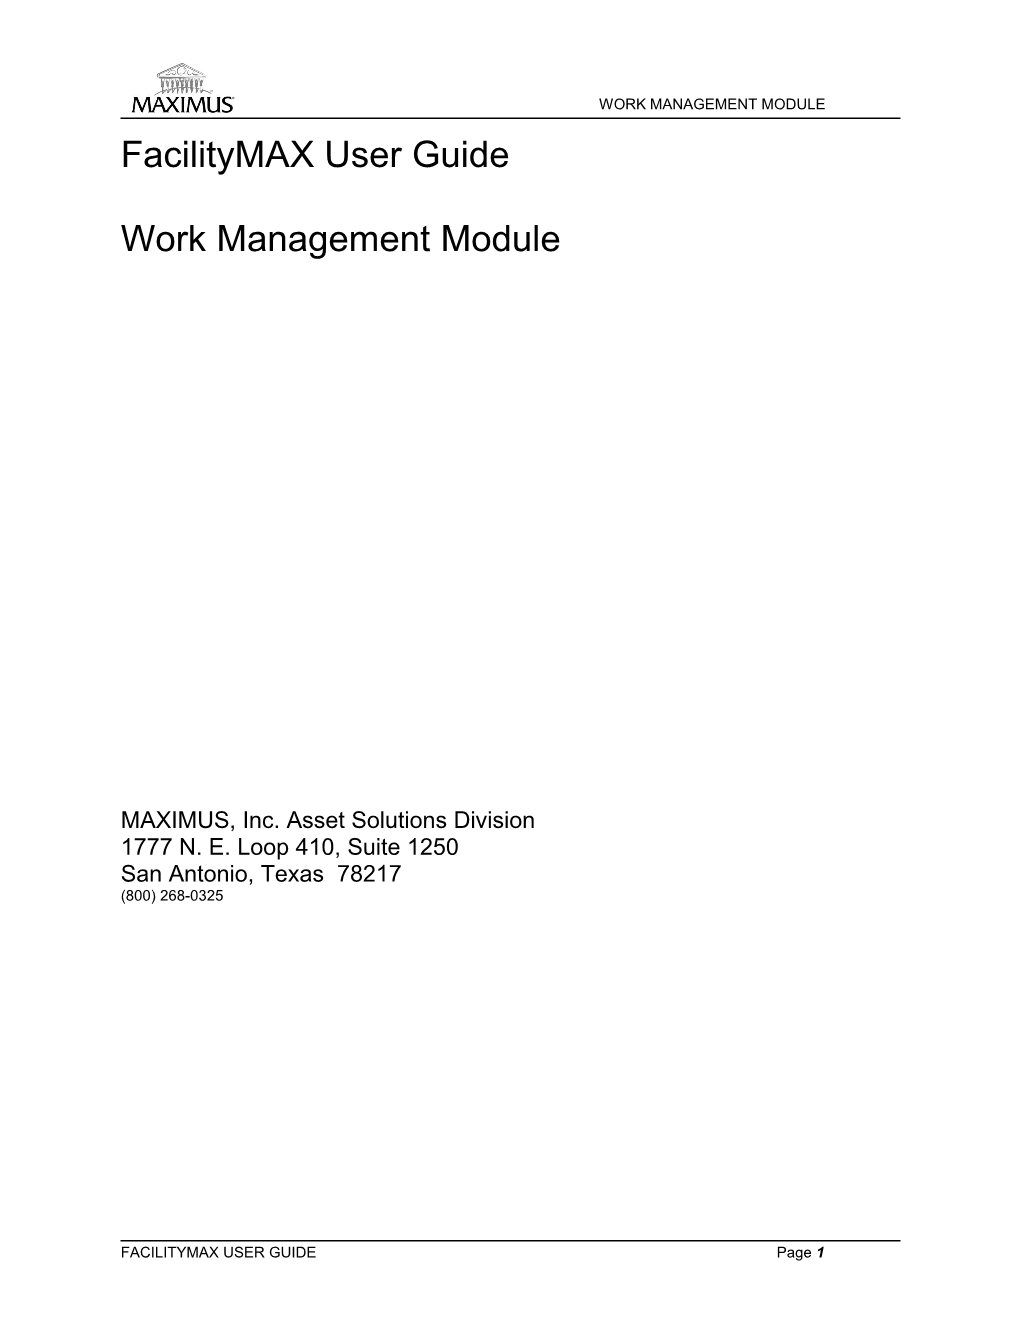 FMAX Work Management Module User Guide